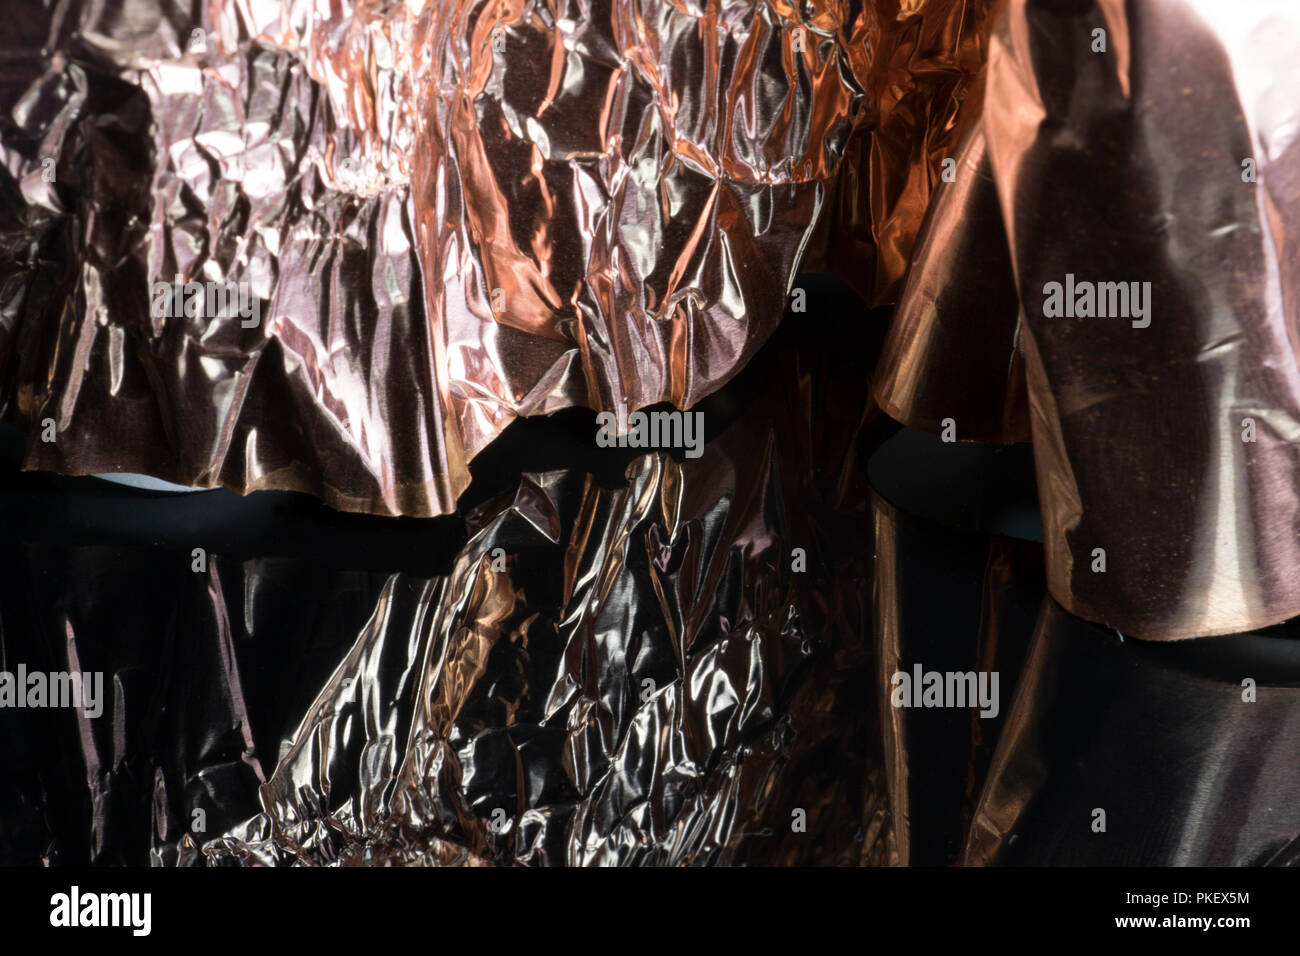 https://c8.alamy.com/comp/PKEX5M/crushed-shiny-metallic-gold-bronze-tin-foil-reflecting-on-a-black-shiny-surface-crumpled-sheet-of-uneven-foil-PKEX5M.jpg